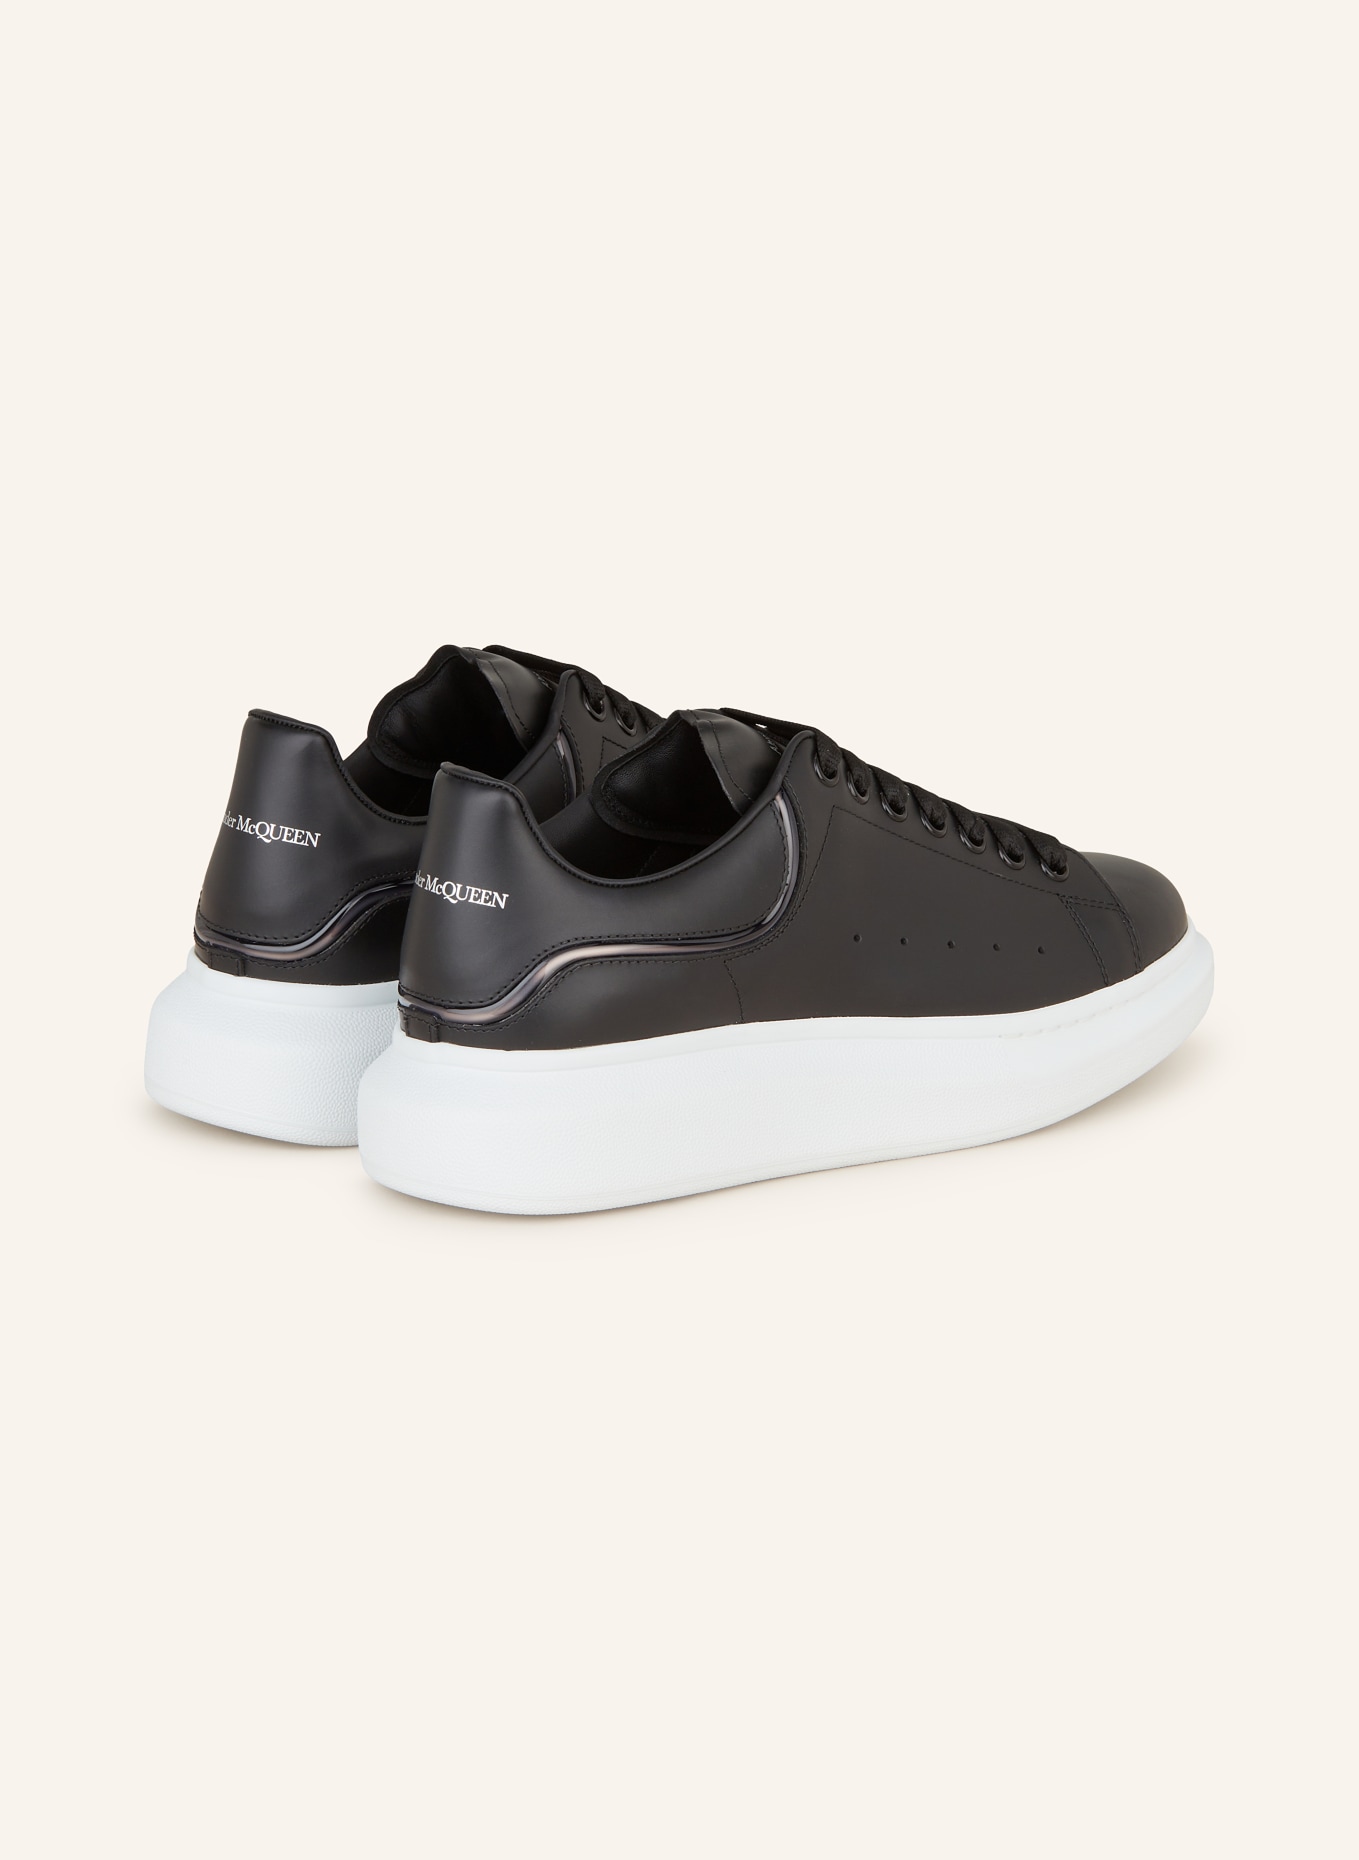 Alexander McQUEEN Sneakers in black/ white